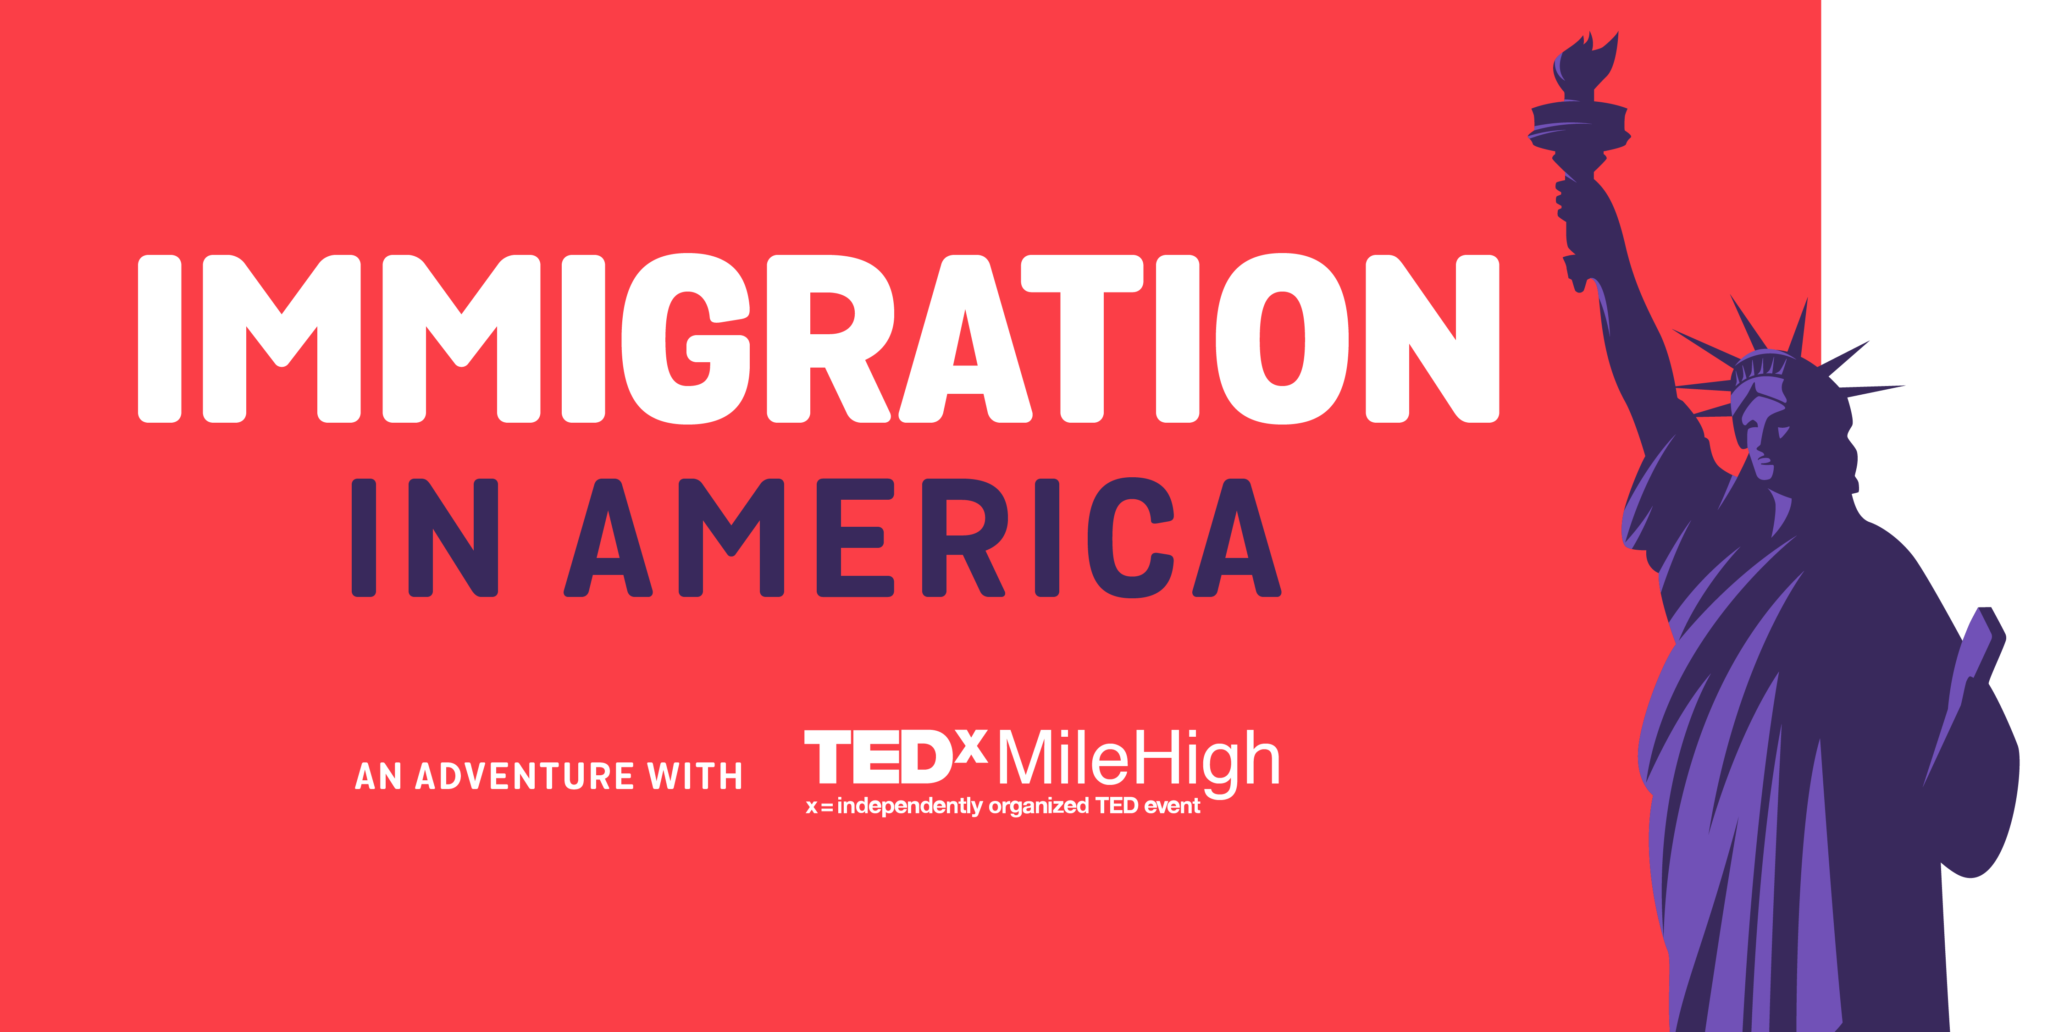 TEDxMileHigh Event Week | Immigration Adventure